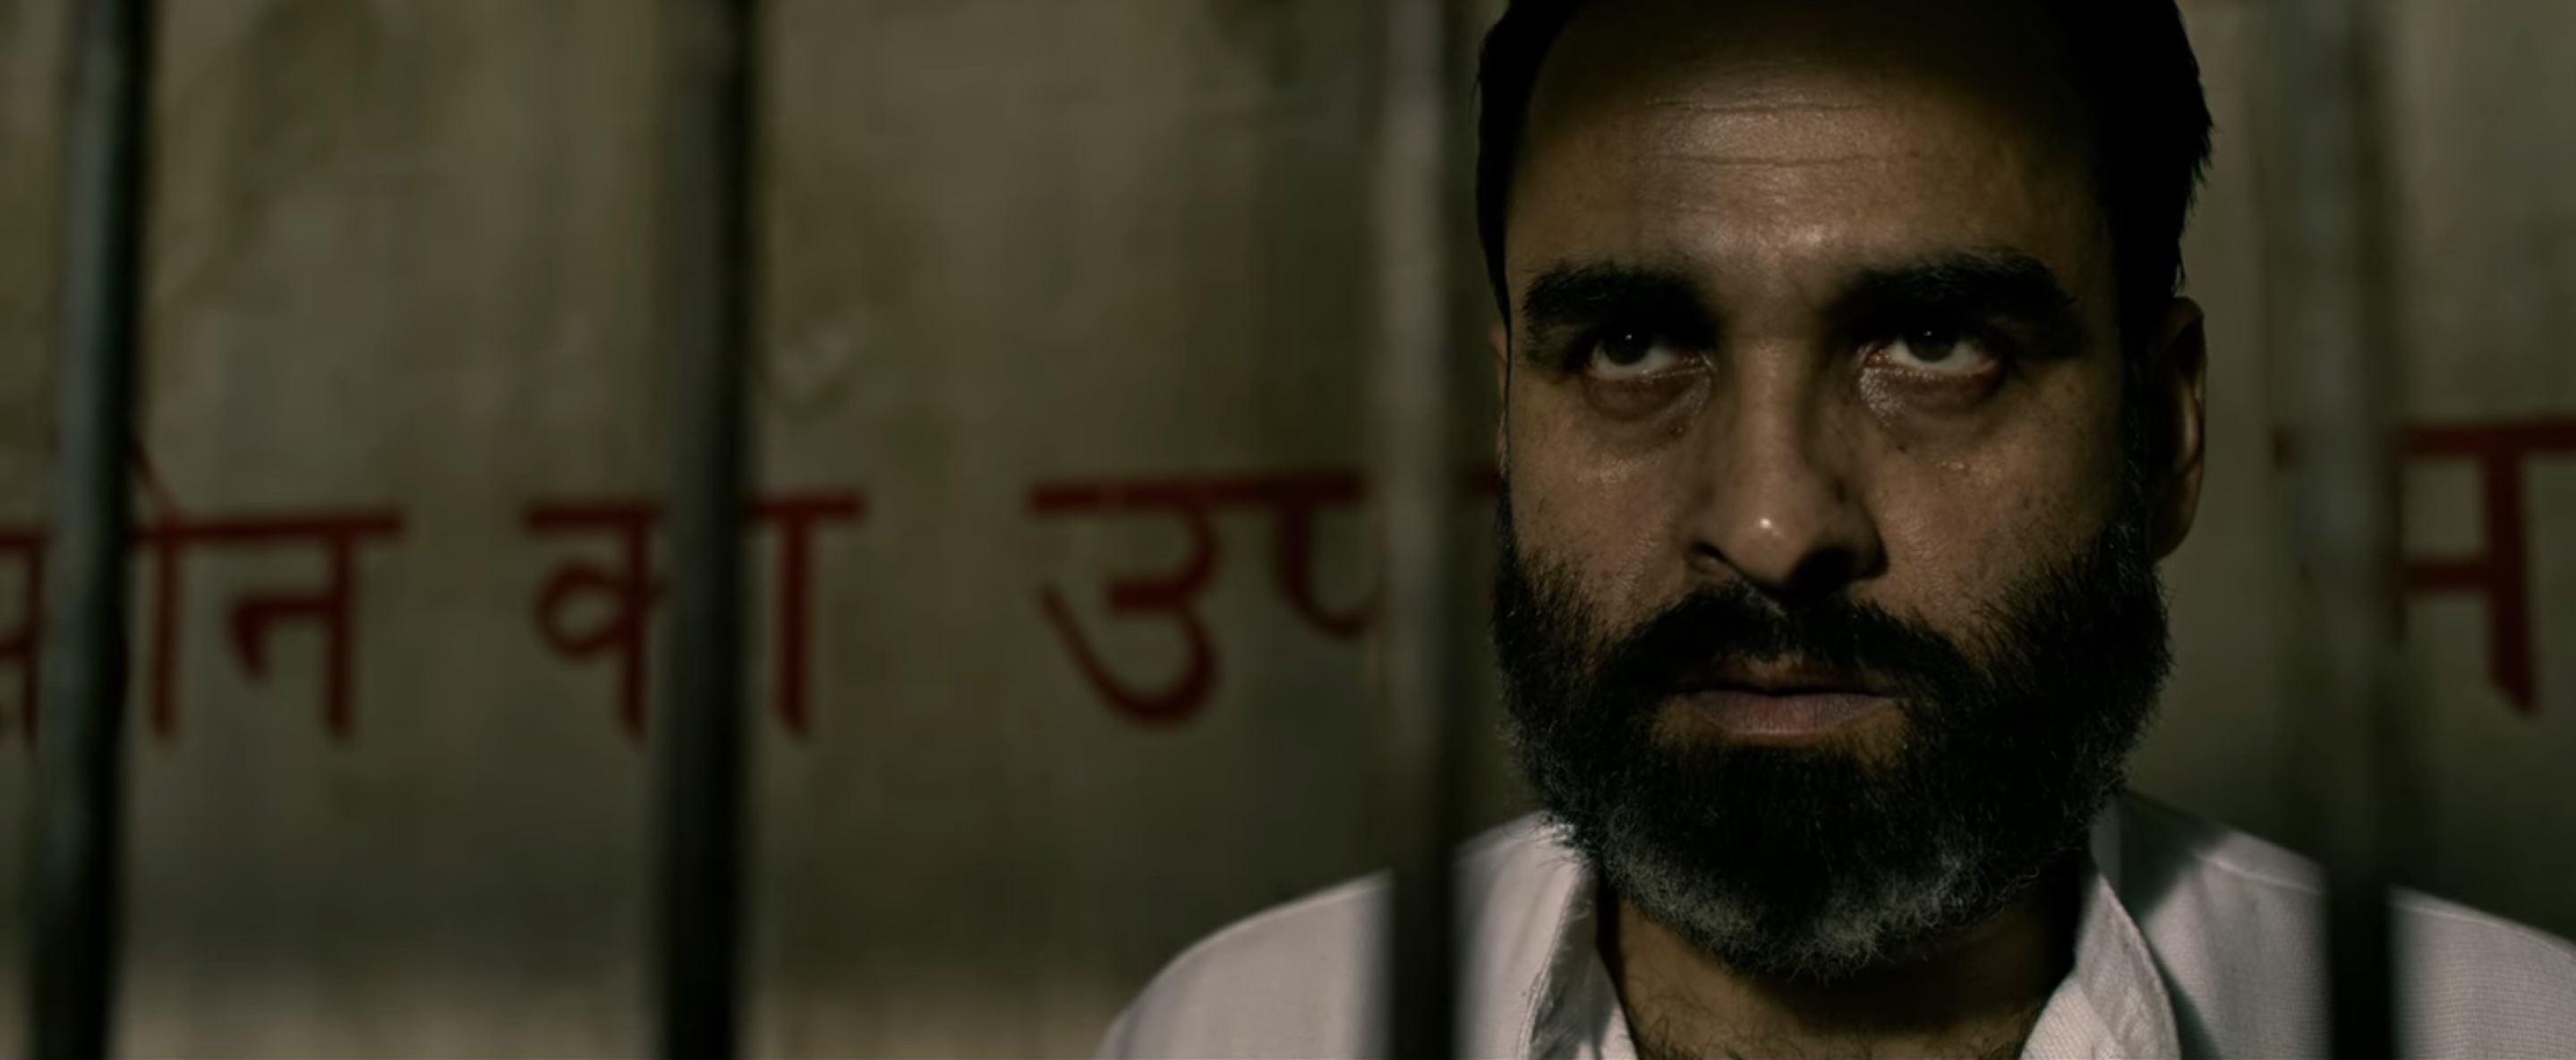 Extraction Cast on Netflix - Pankaj Tripathi as Ovi Mahajan Sr.